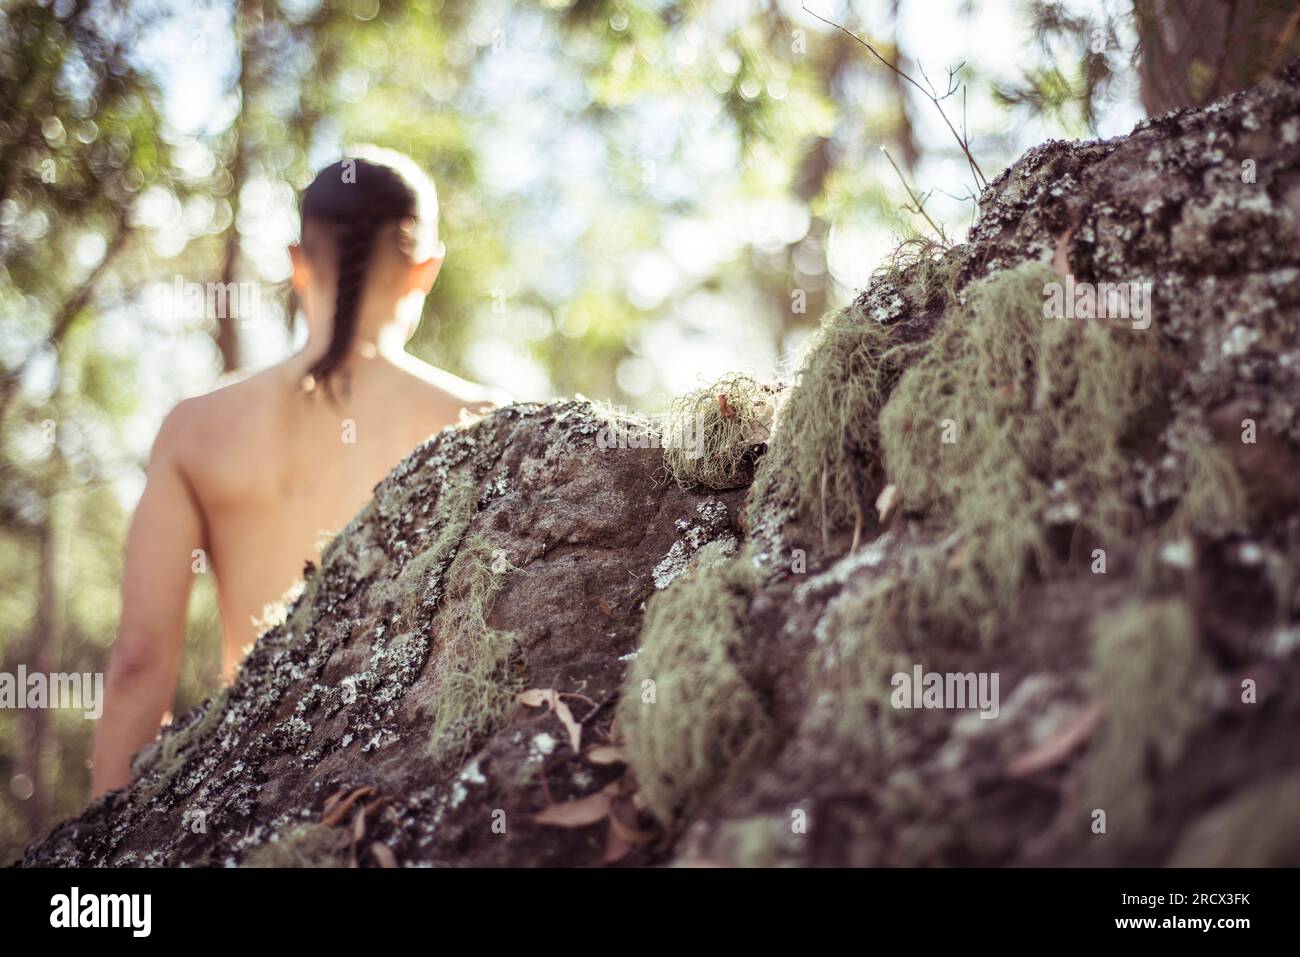 Ninja figure stands behind mossy rock in nature Stock Photo